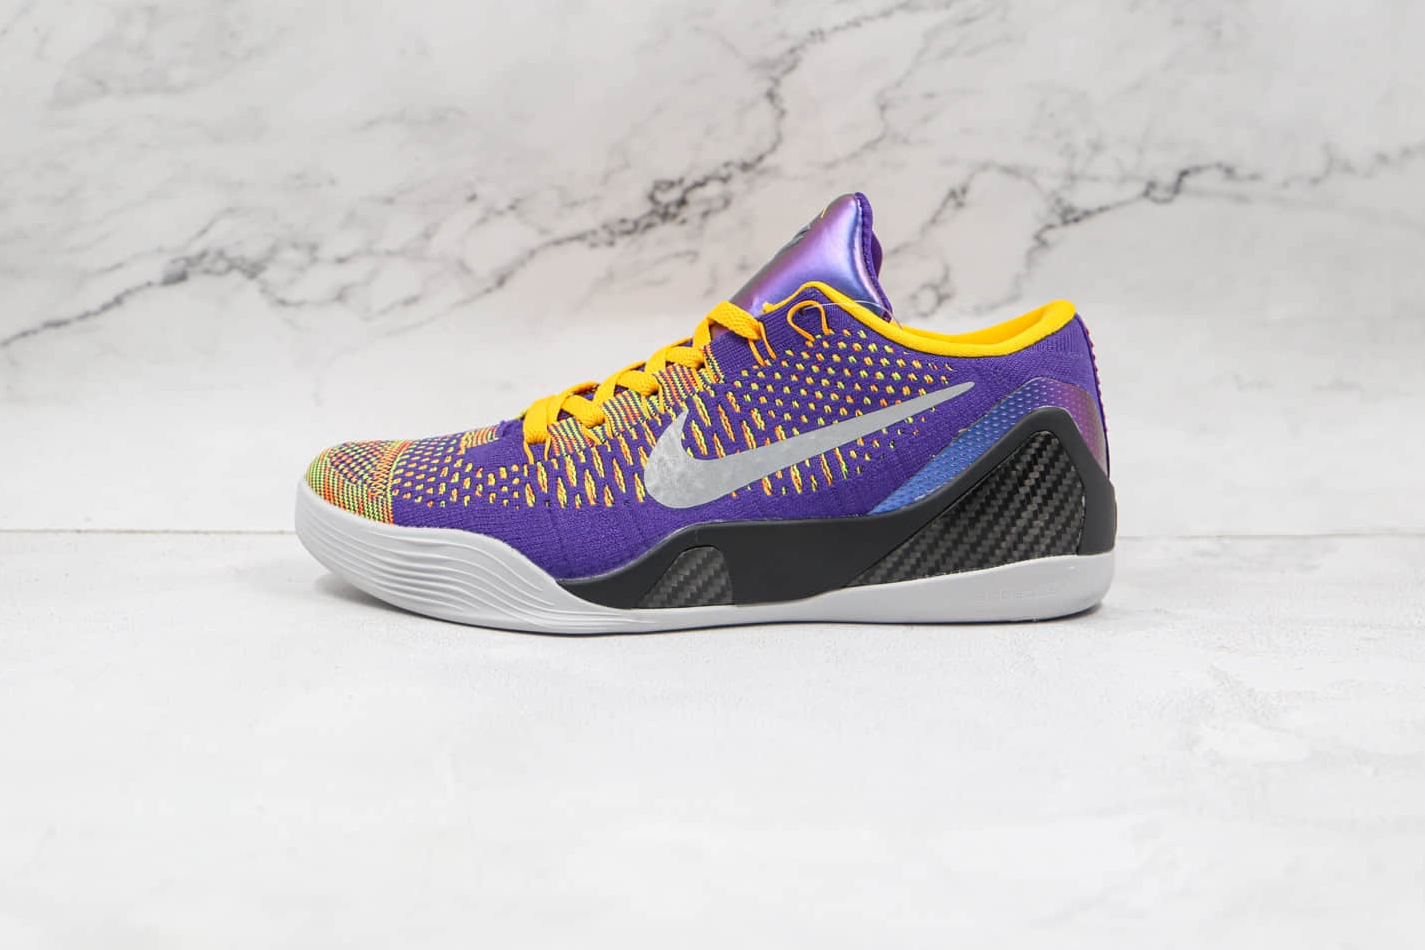 Nike Zoom Kobe 9 IX Purple Yellow Black 630487-500 - Stylish and Dynamic Performance Basketball Shoes